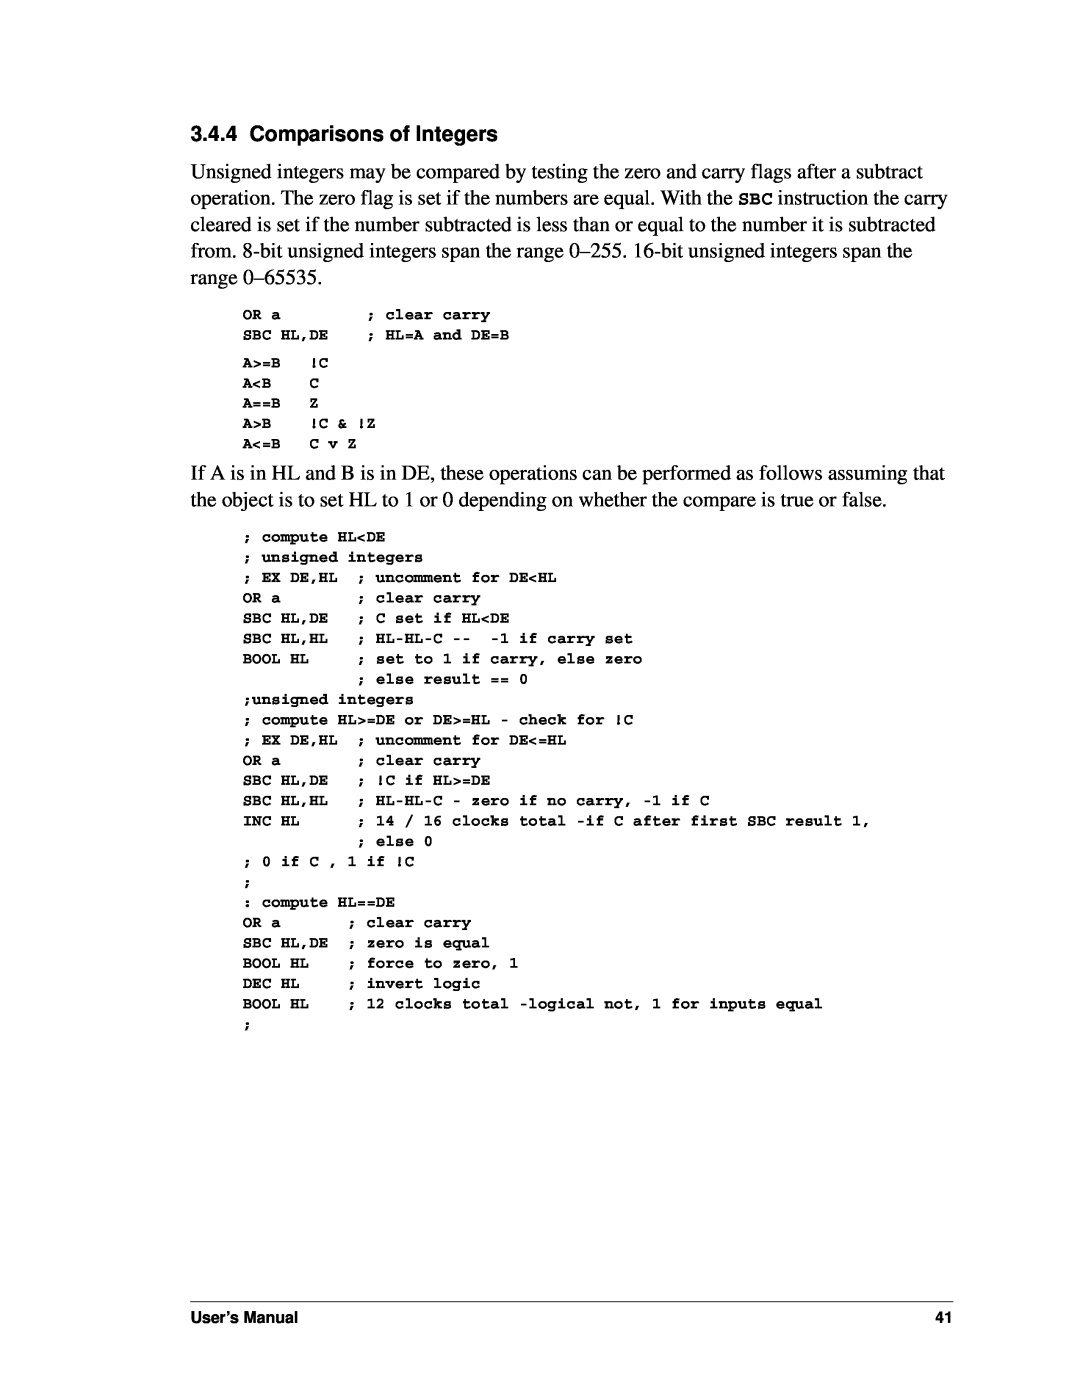 Jameco Electronics 3000, 2000 manual Comparisons of Integers, User’s Manual 